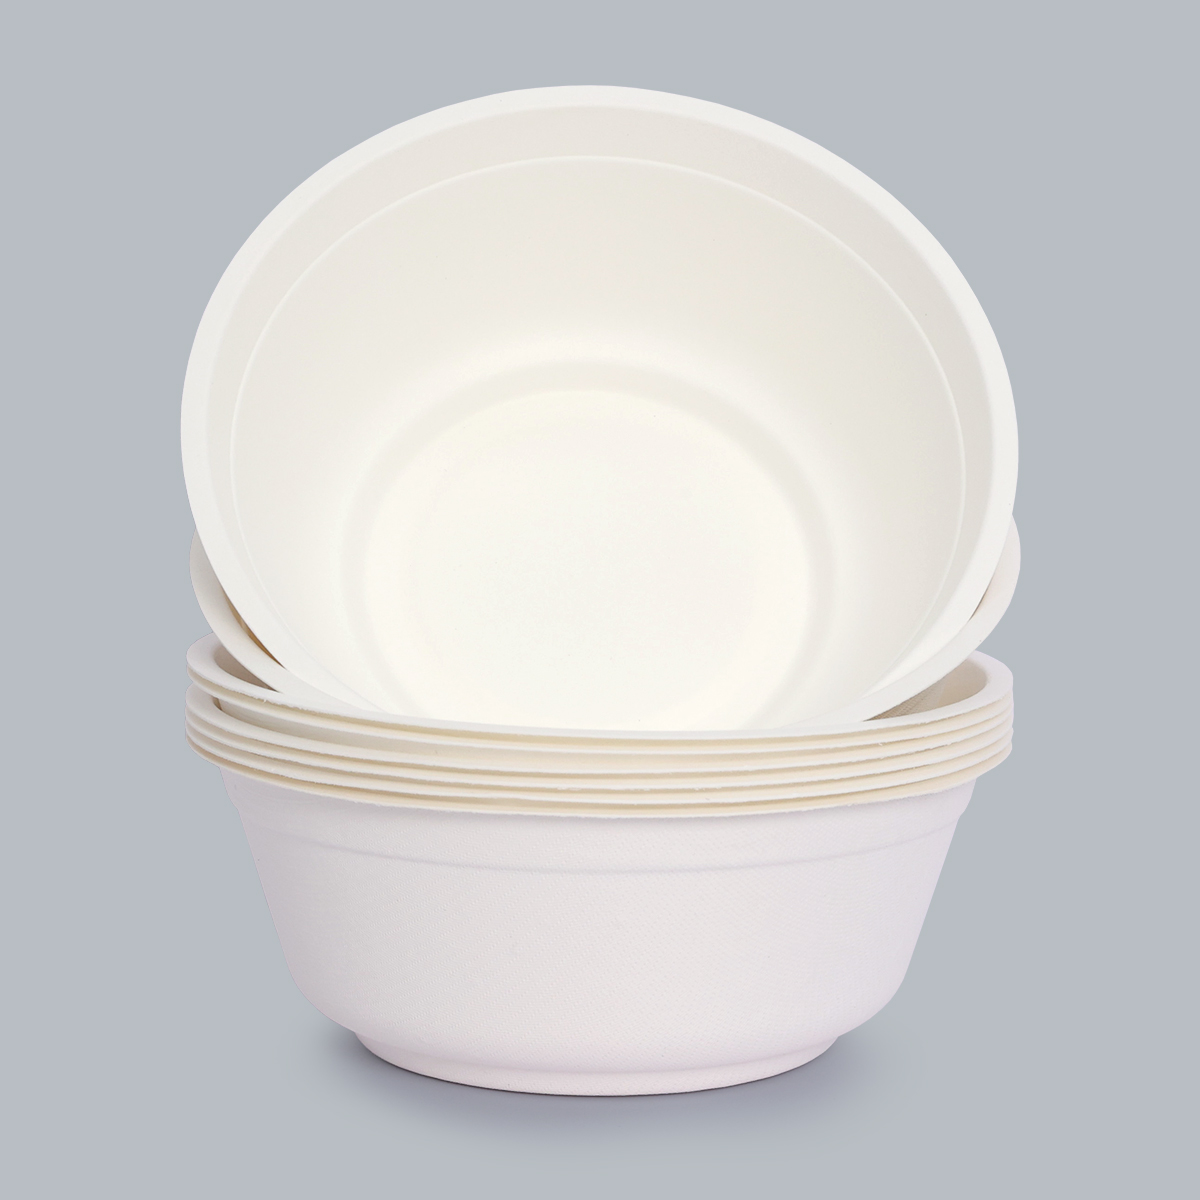 Picnic bowls Disposable environmentally friendly tableware Takeout bowls